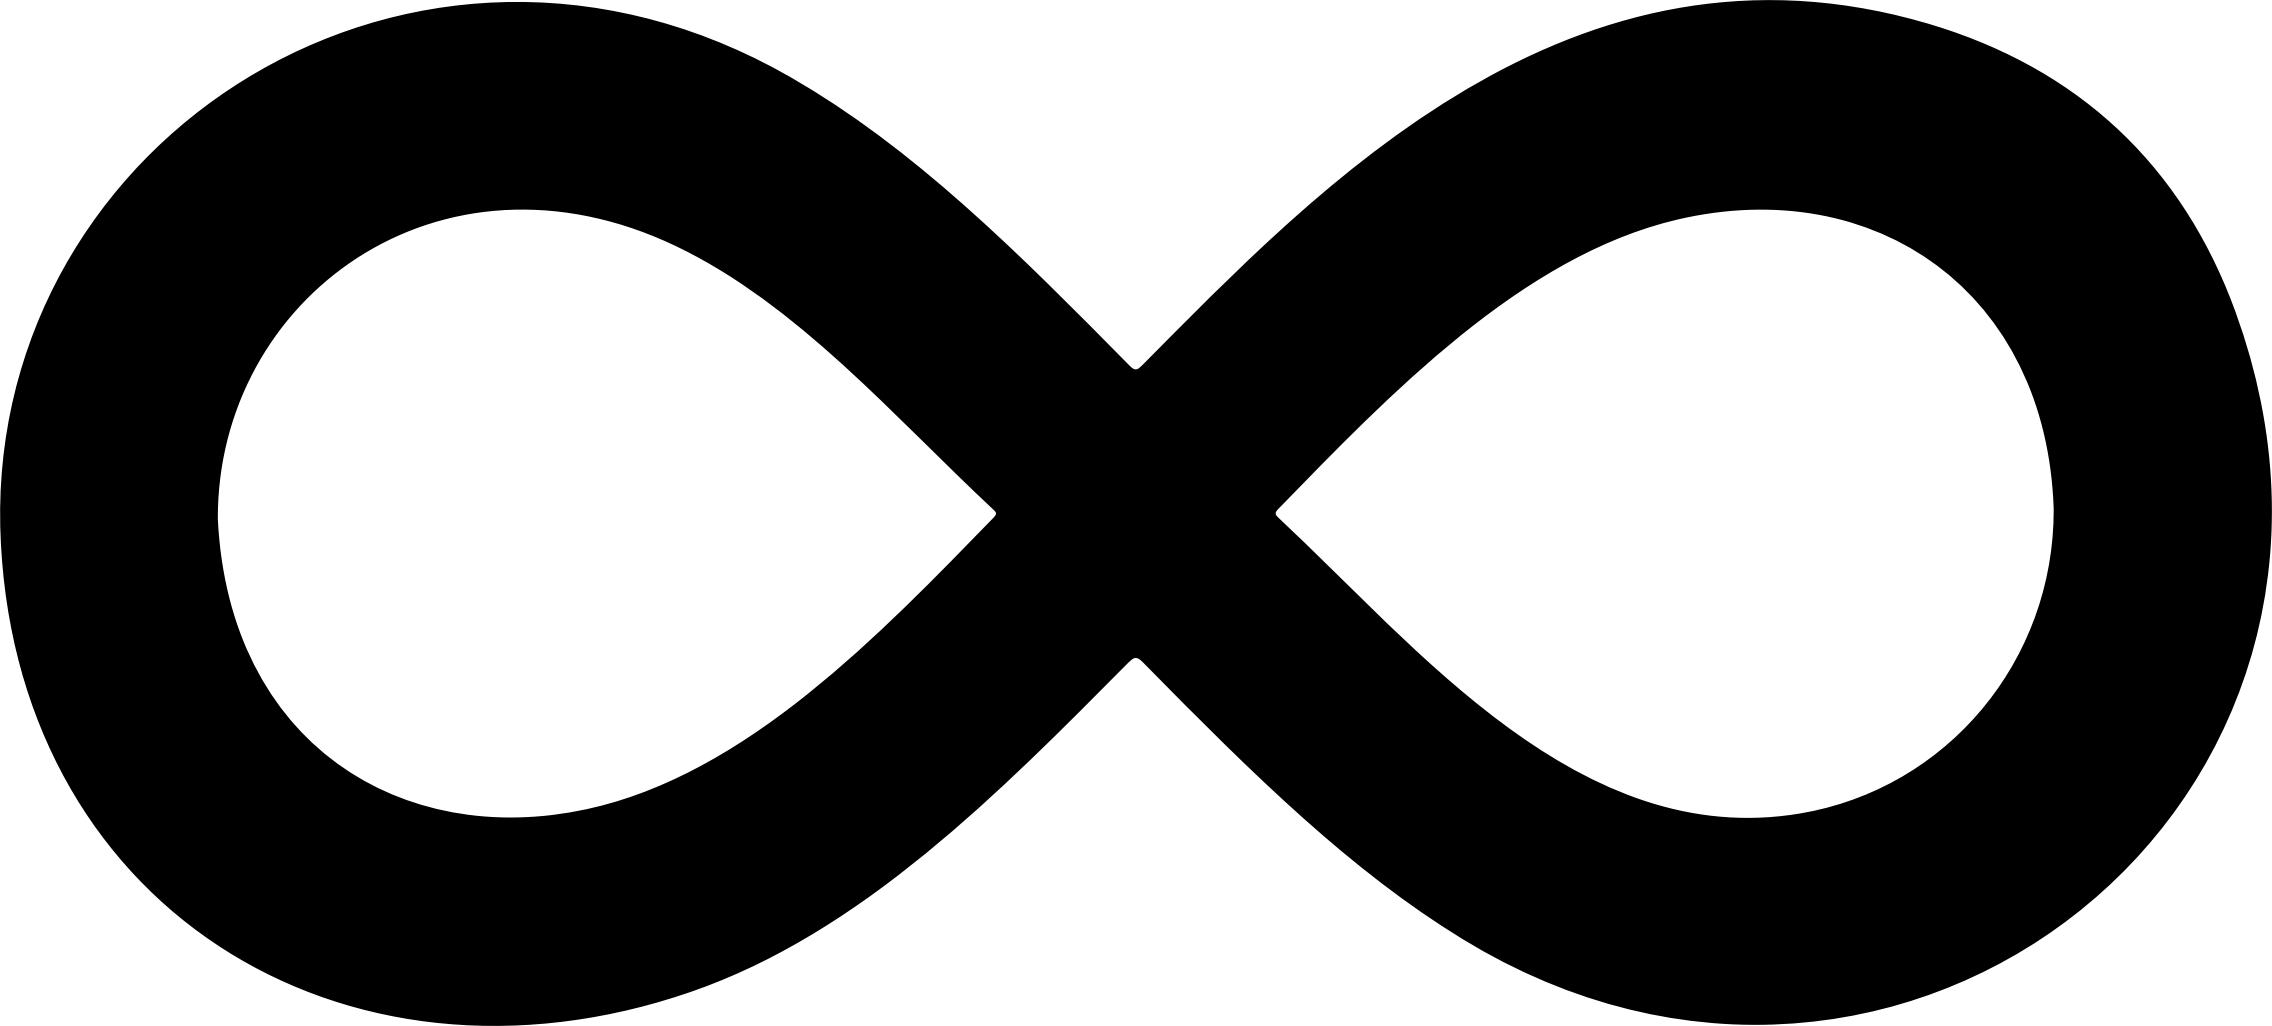 infinity symbol copy paste mac